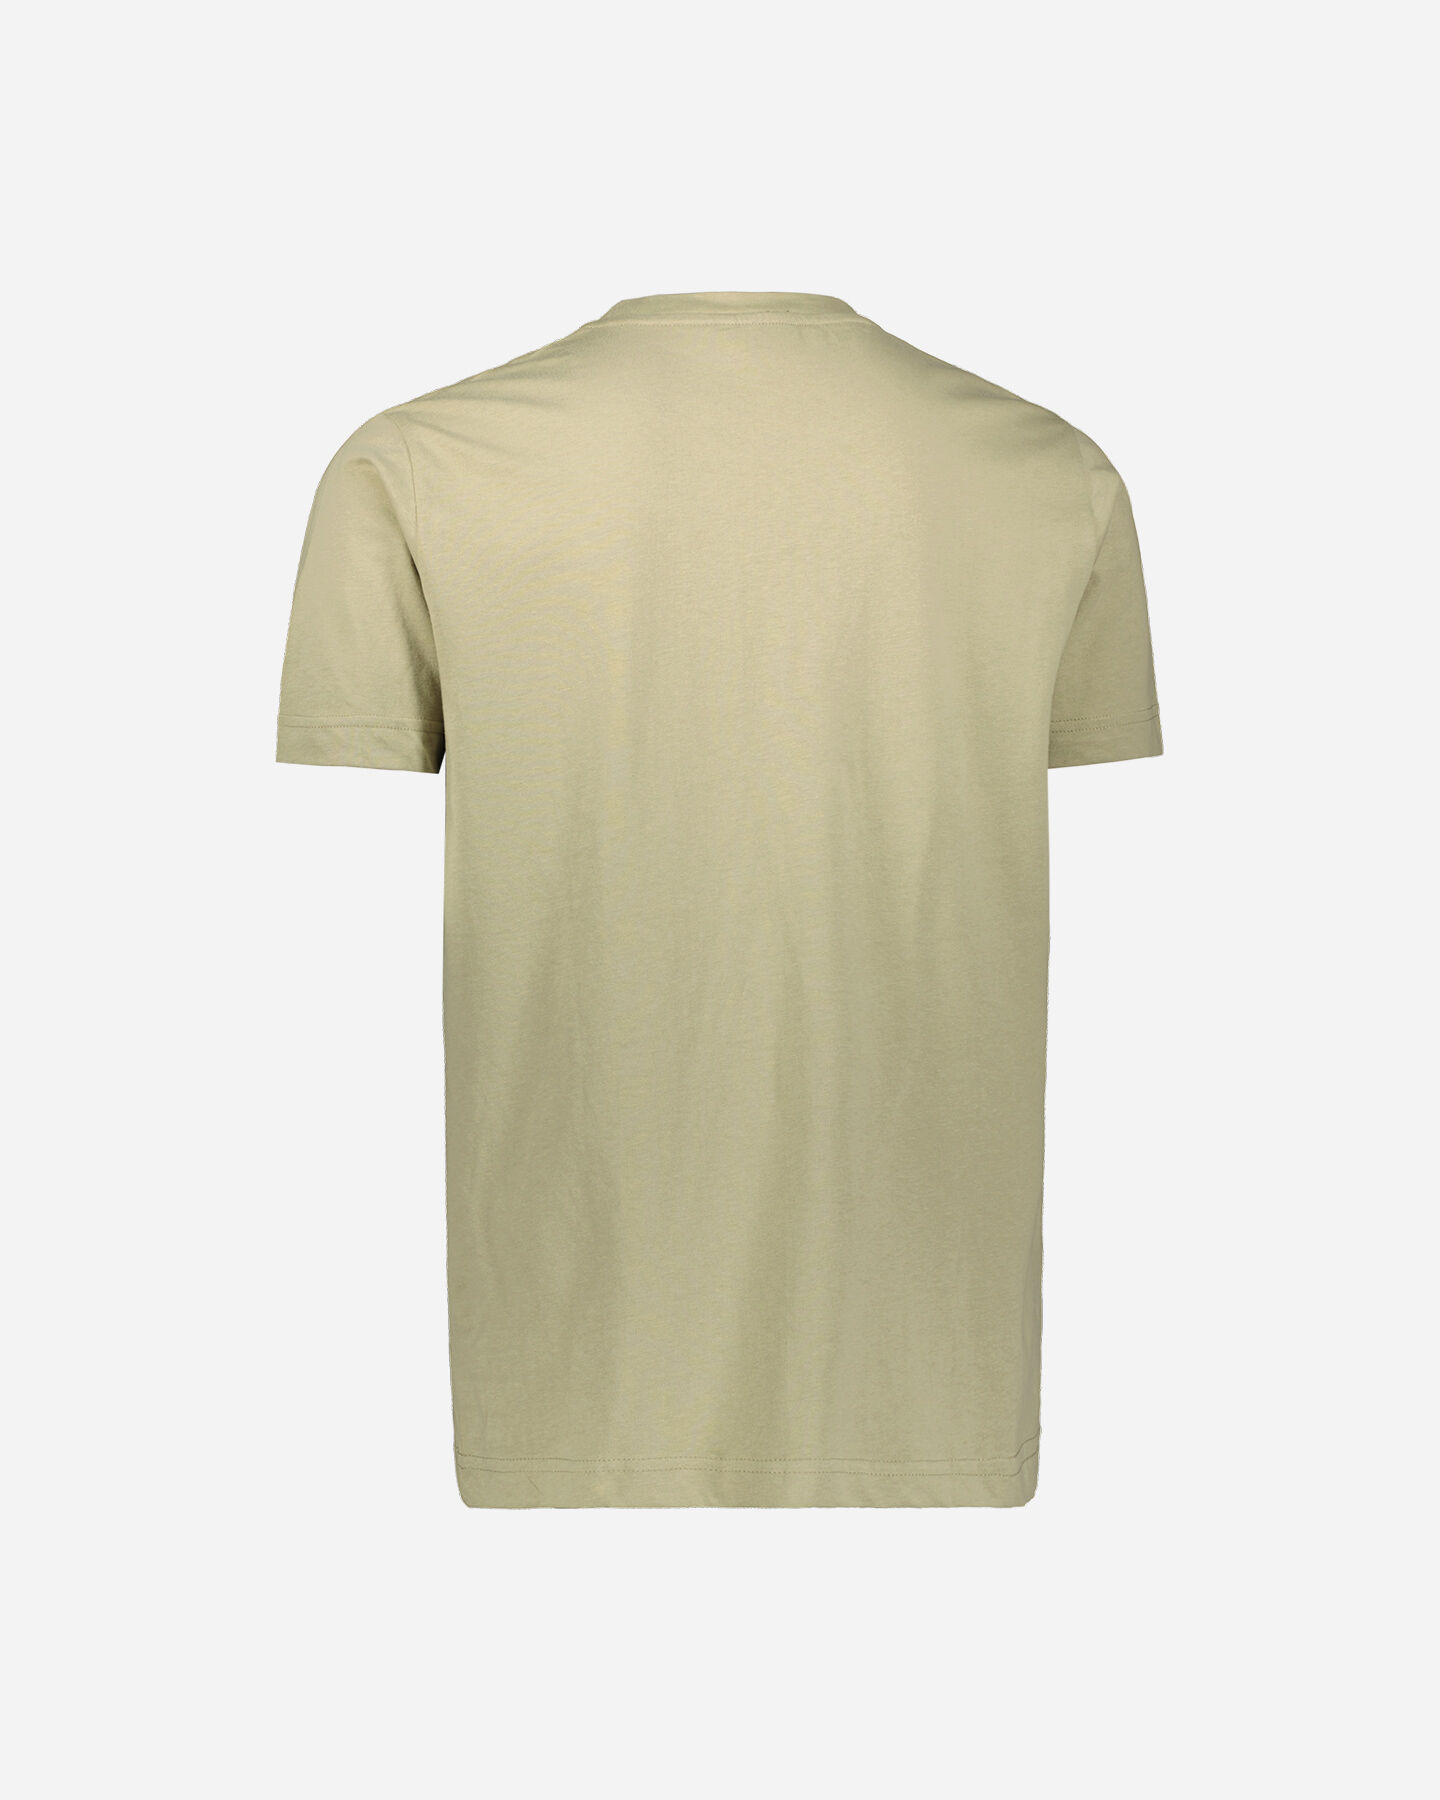  T-Shirt BEAR SABBIA LOGO M S4101082|165|S scatto 1